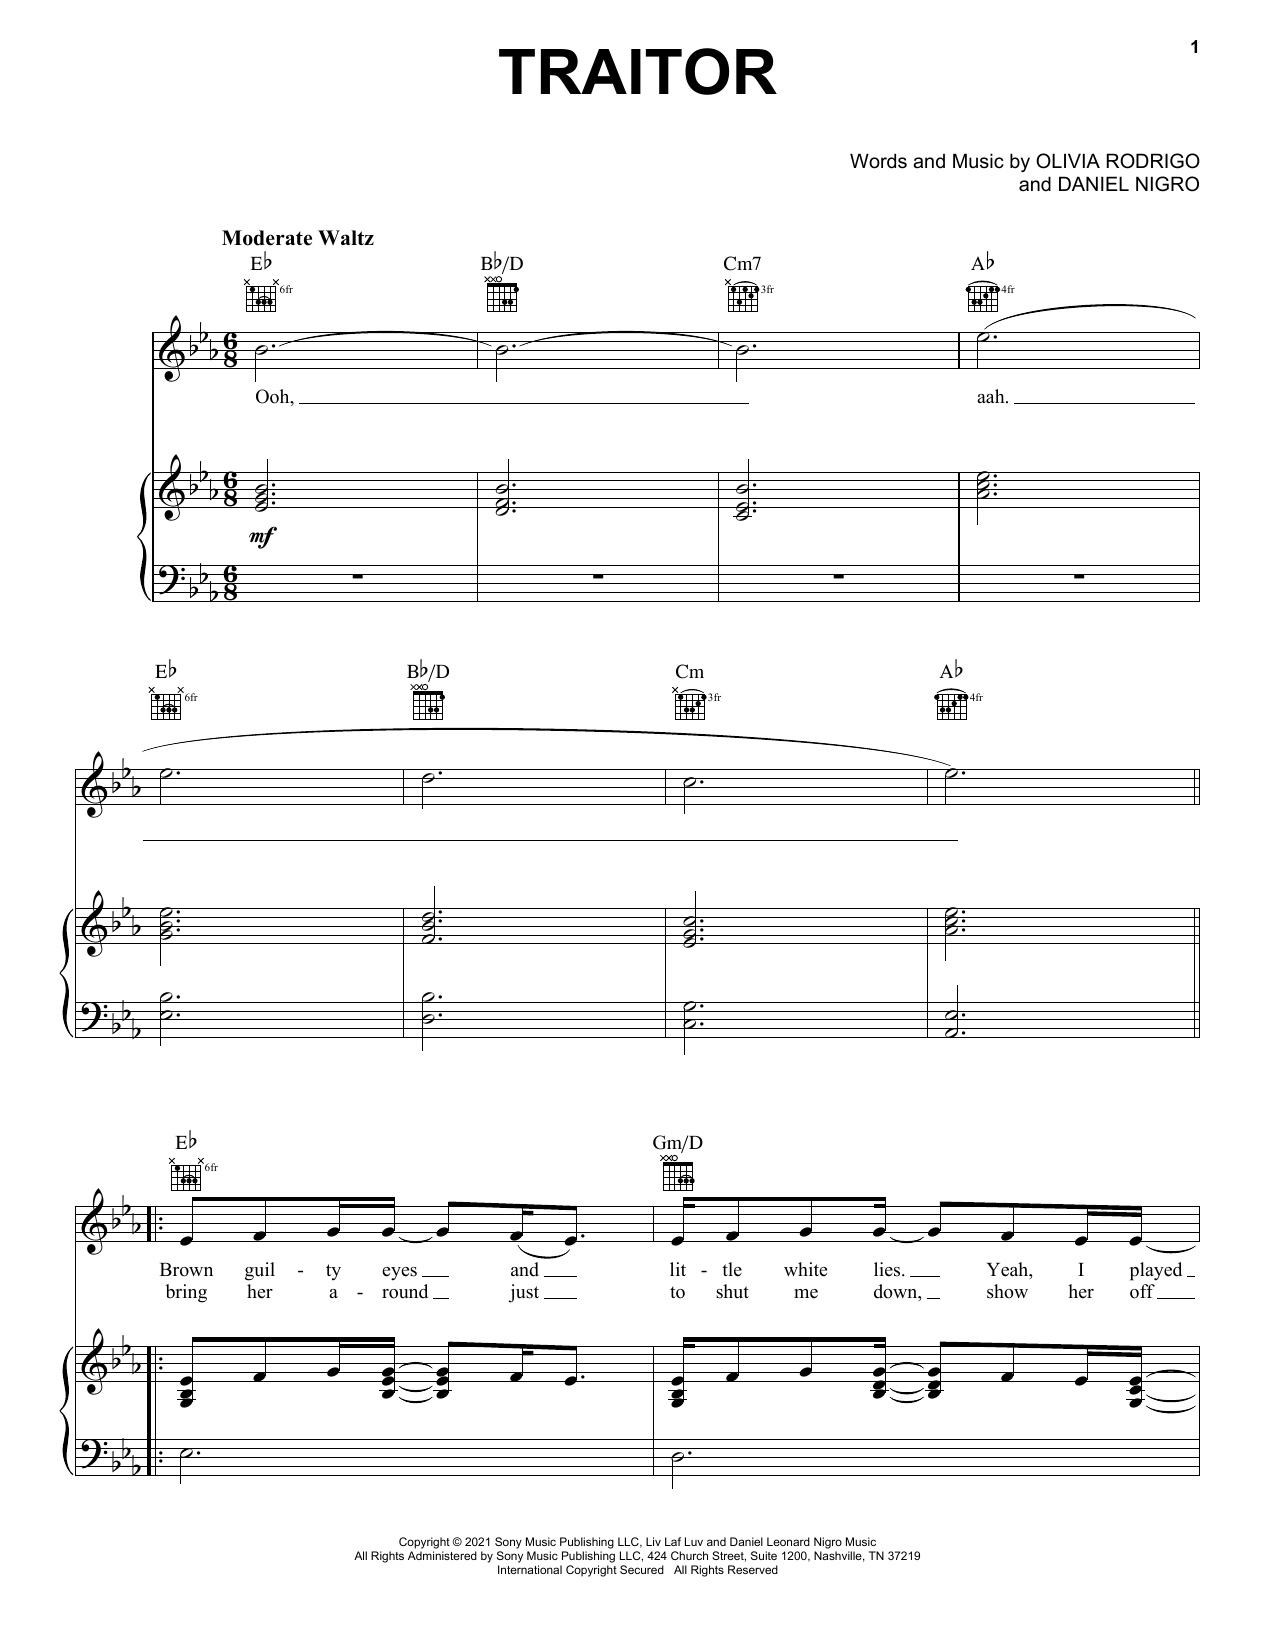 Olivia Rodrigo traitor Sheet Music Notes & Chords for Easy Piano - Download or Print PDF